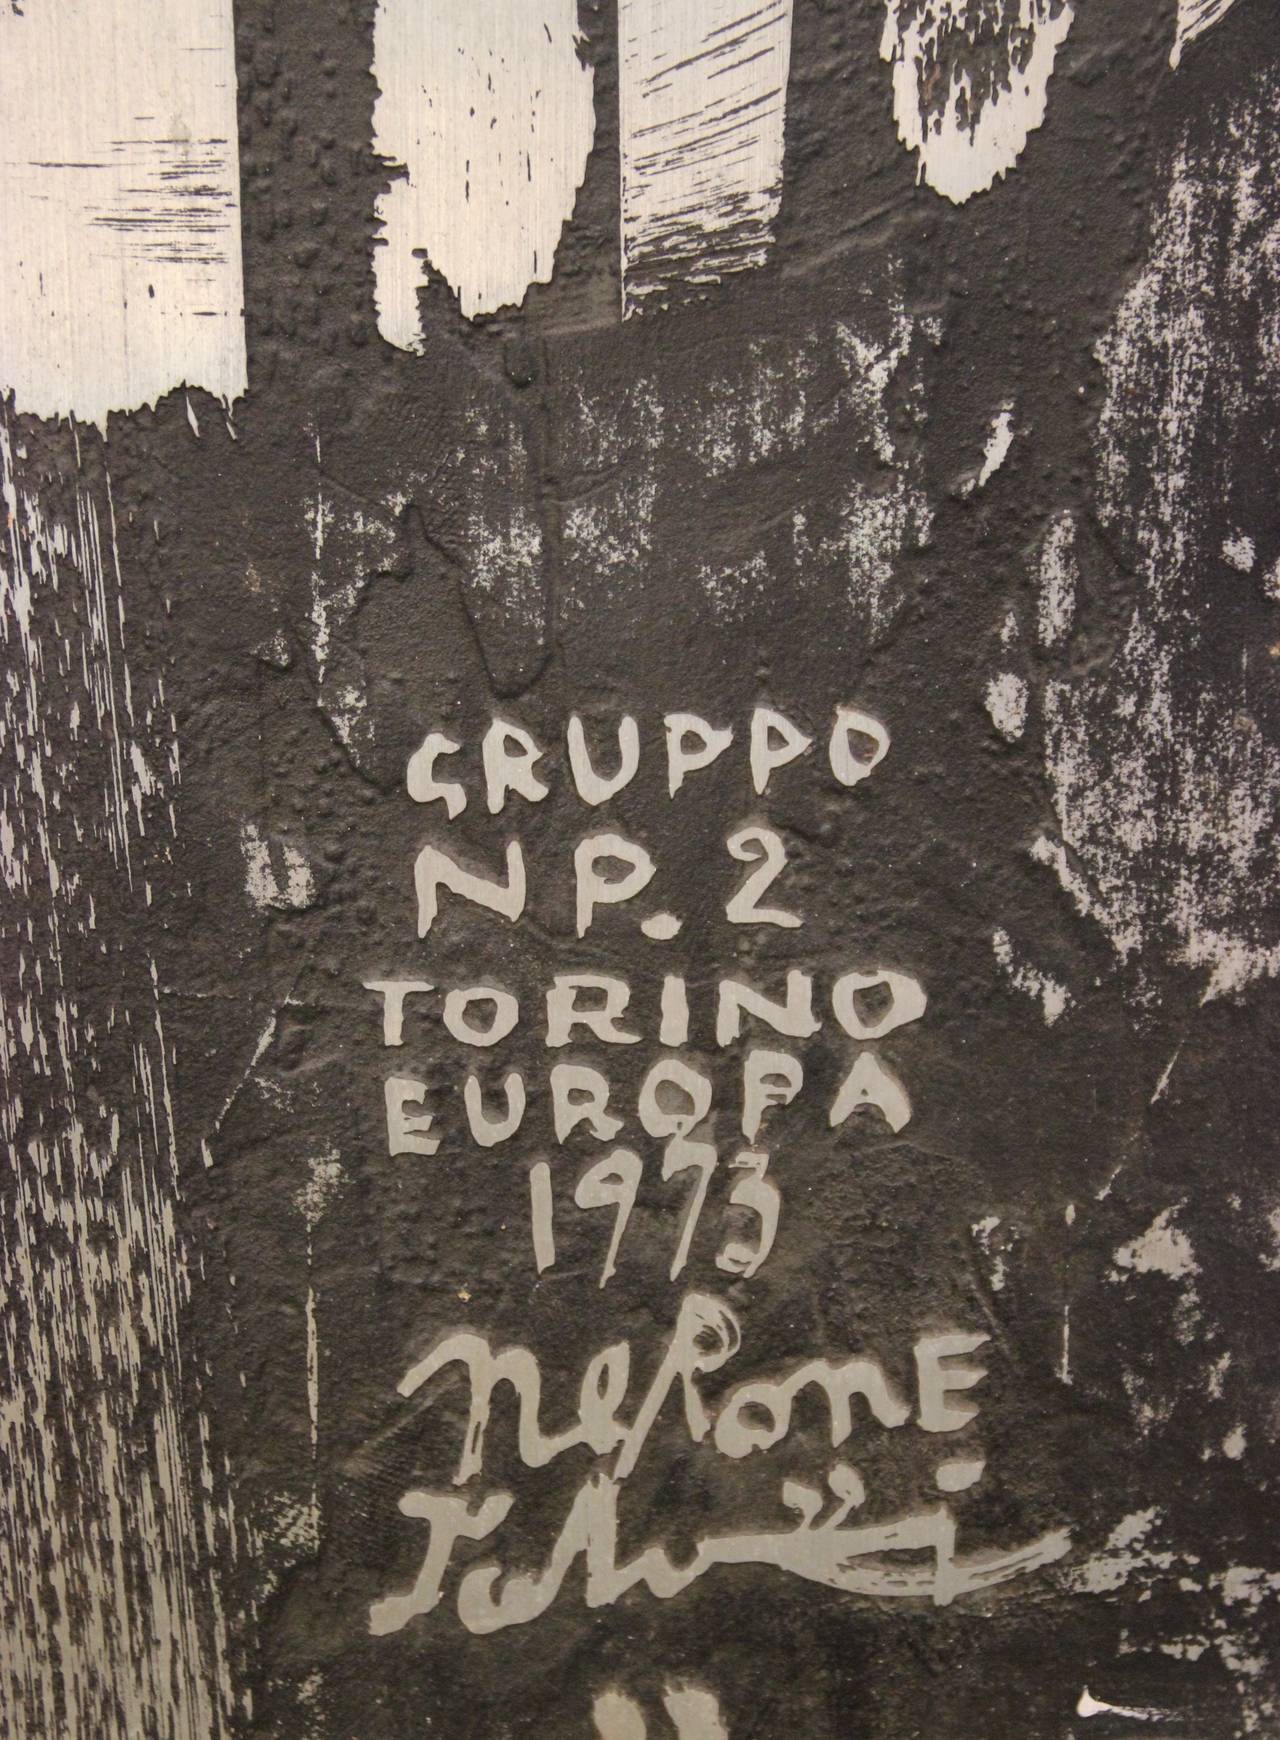 Nerone Patuzzi, NP2 model, large engraving on zinc,
signed: Gruppo NP.2, Torini EUROPA 1973 Patuzzi Nerone,
Production NP2, circa 1973, Italy.
Height: 2.30m, width: 150 cm.